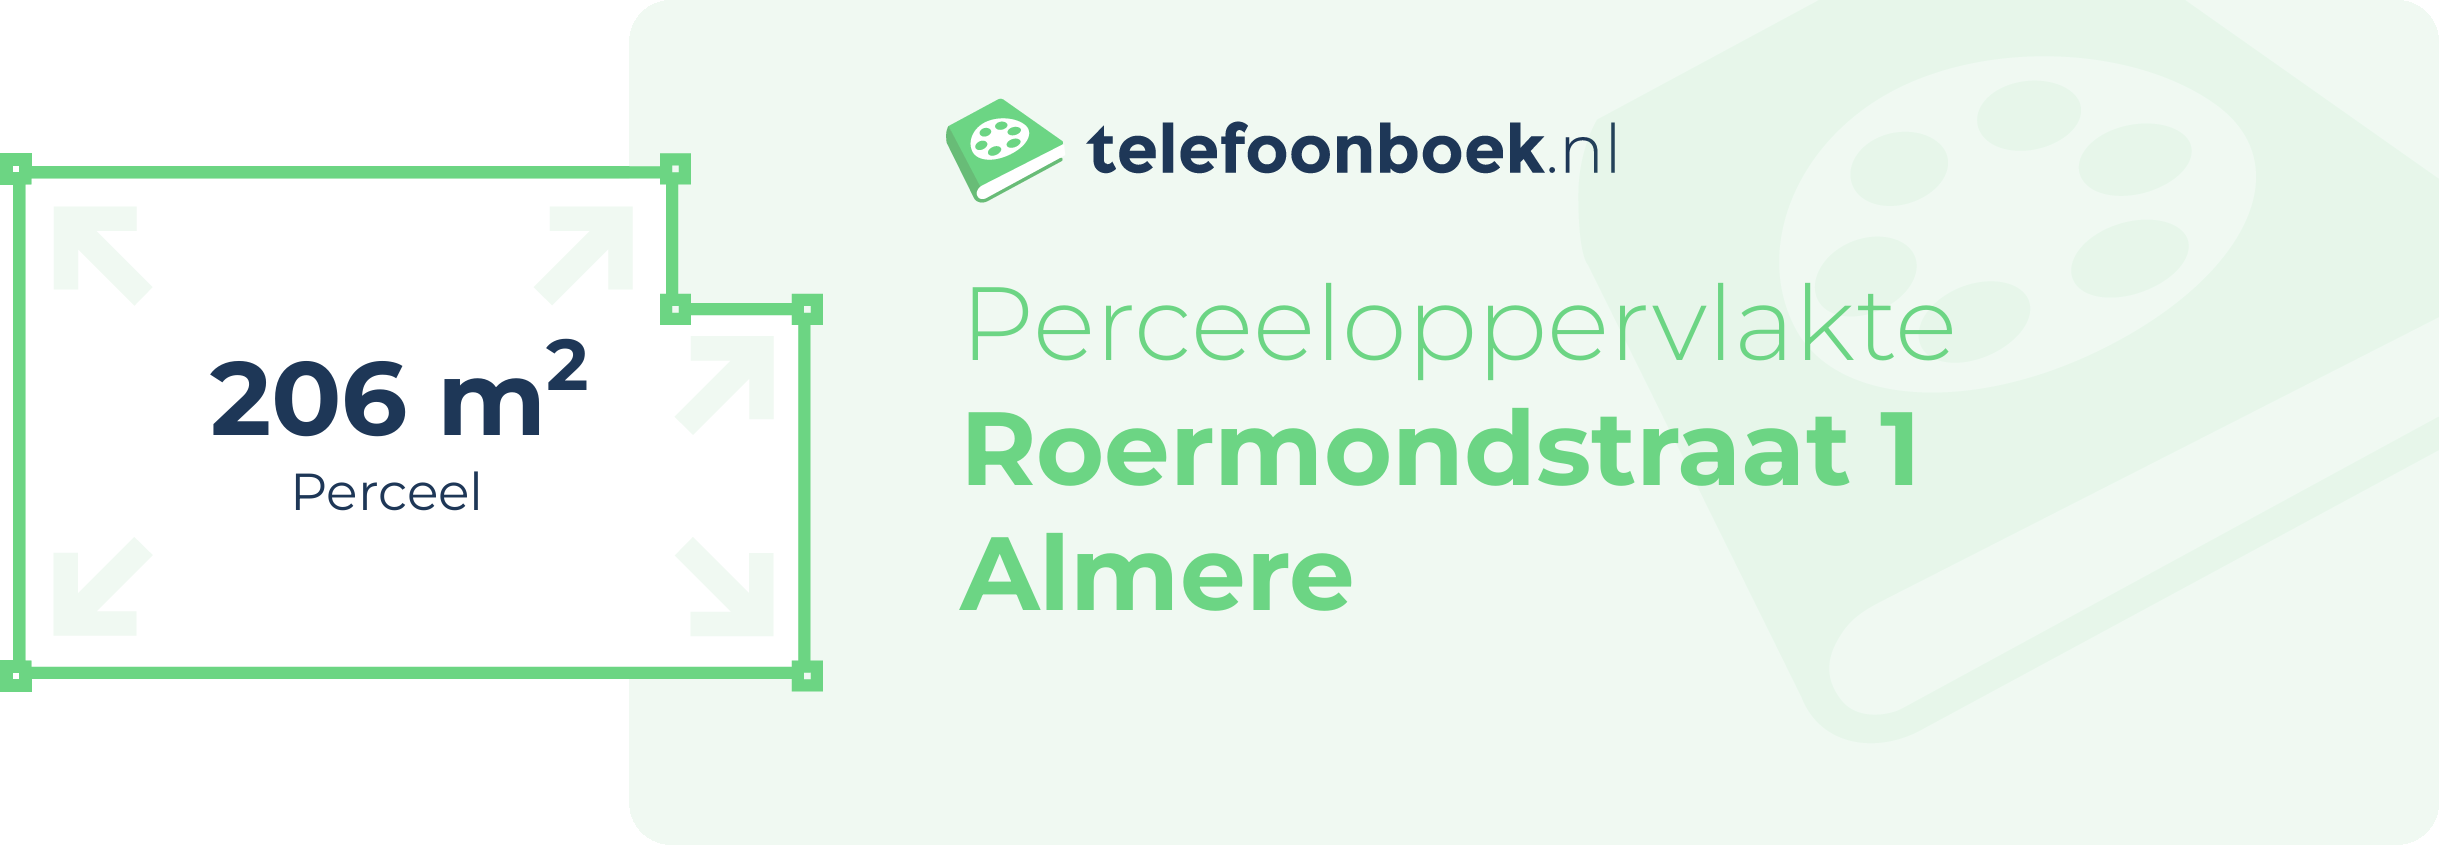 Perceeloppervlakte Roermondstraat 1 Almere